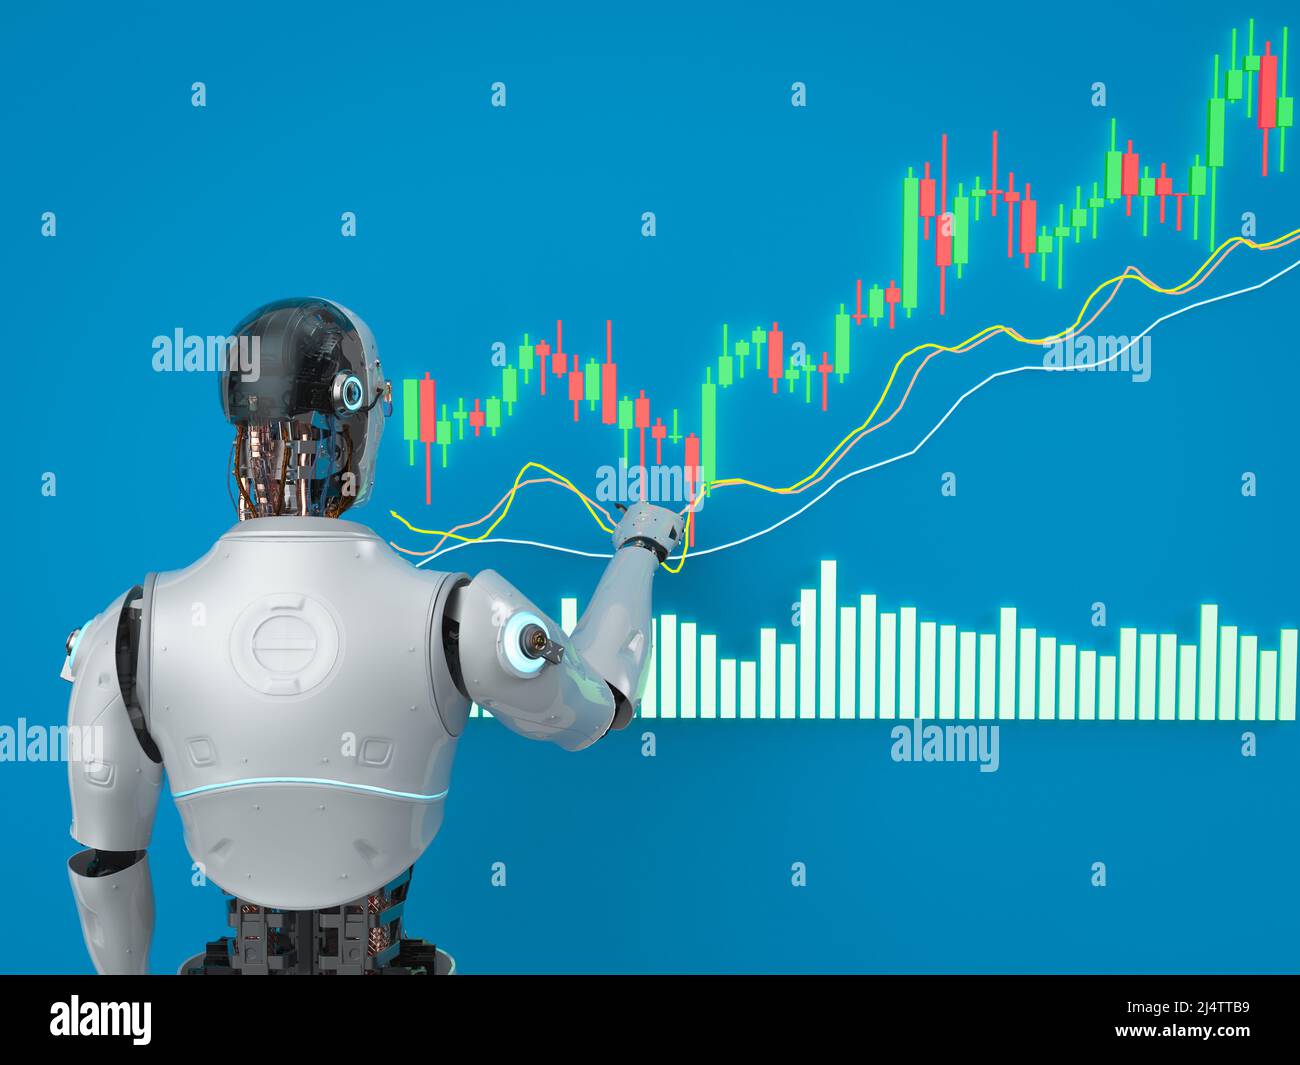 Trading-Roboter-Konzept mit 3D Rendering ai Roboter mit Kerzenständer  Grafik Stockfotografie - Alamy